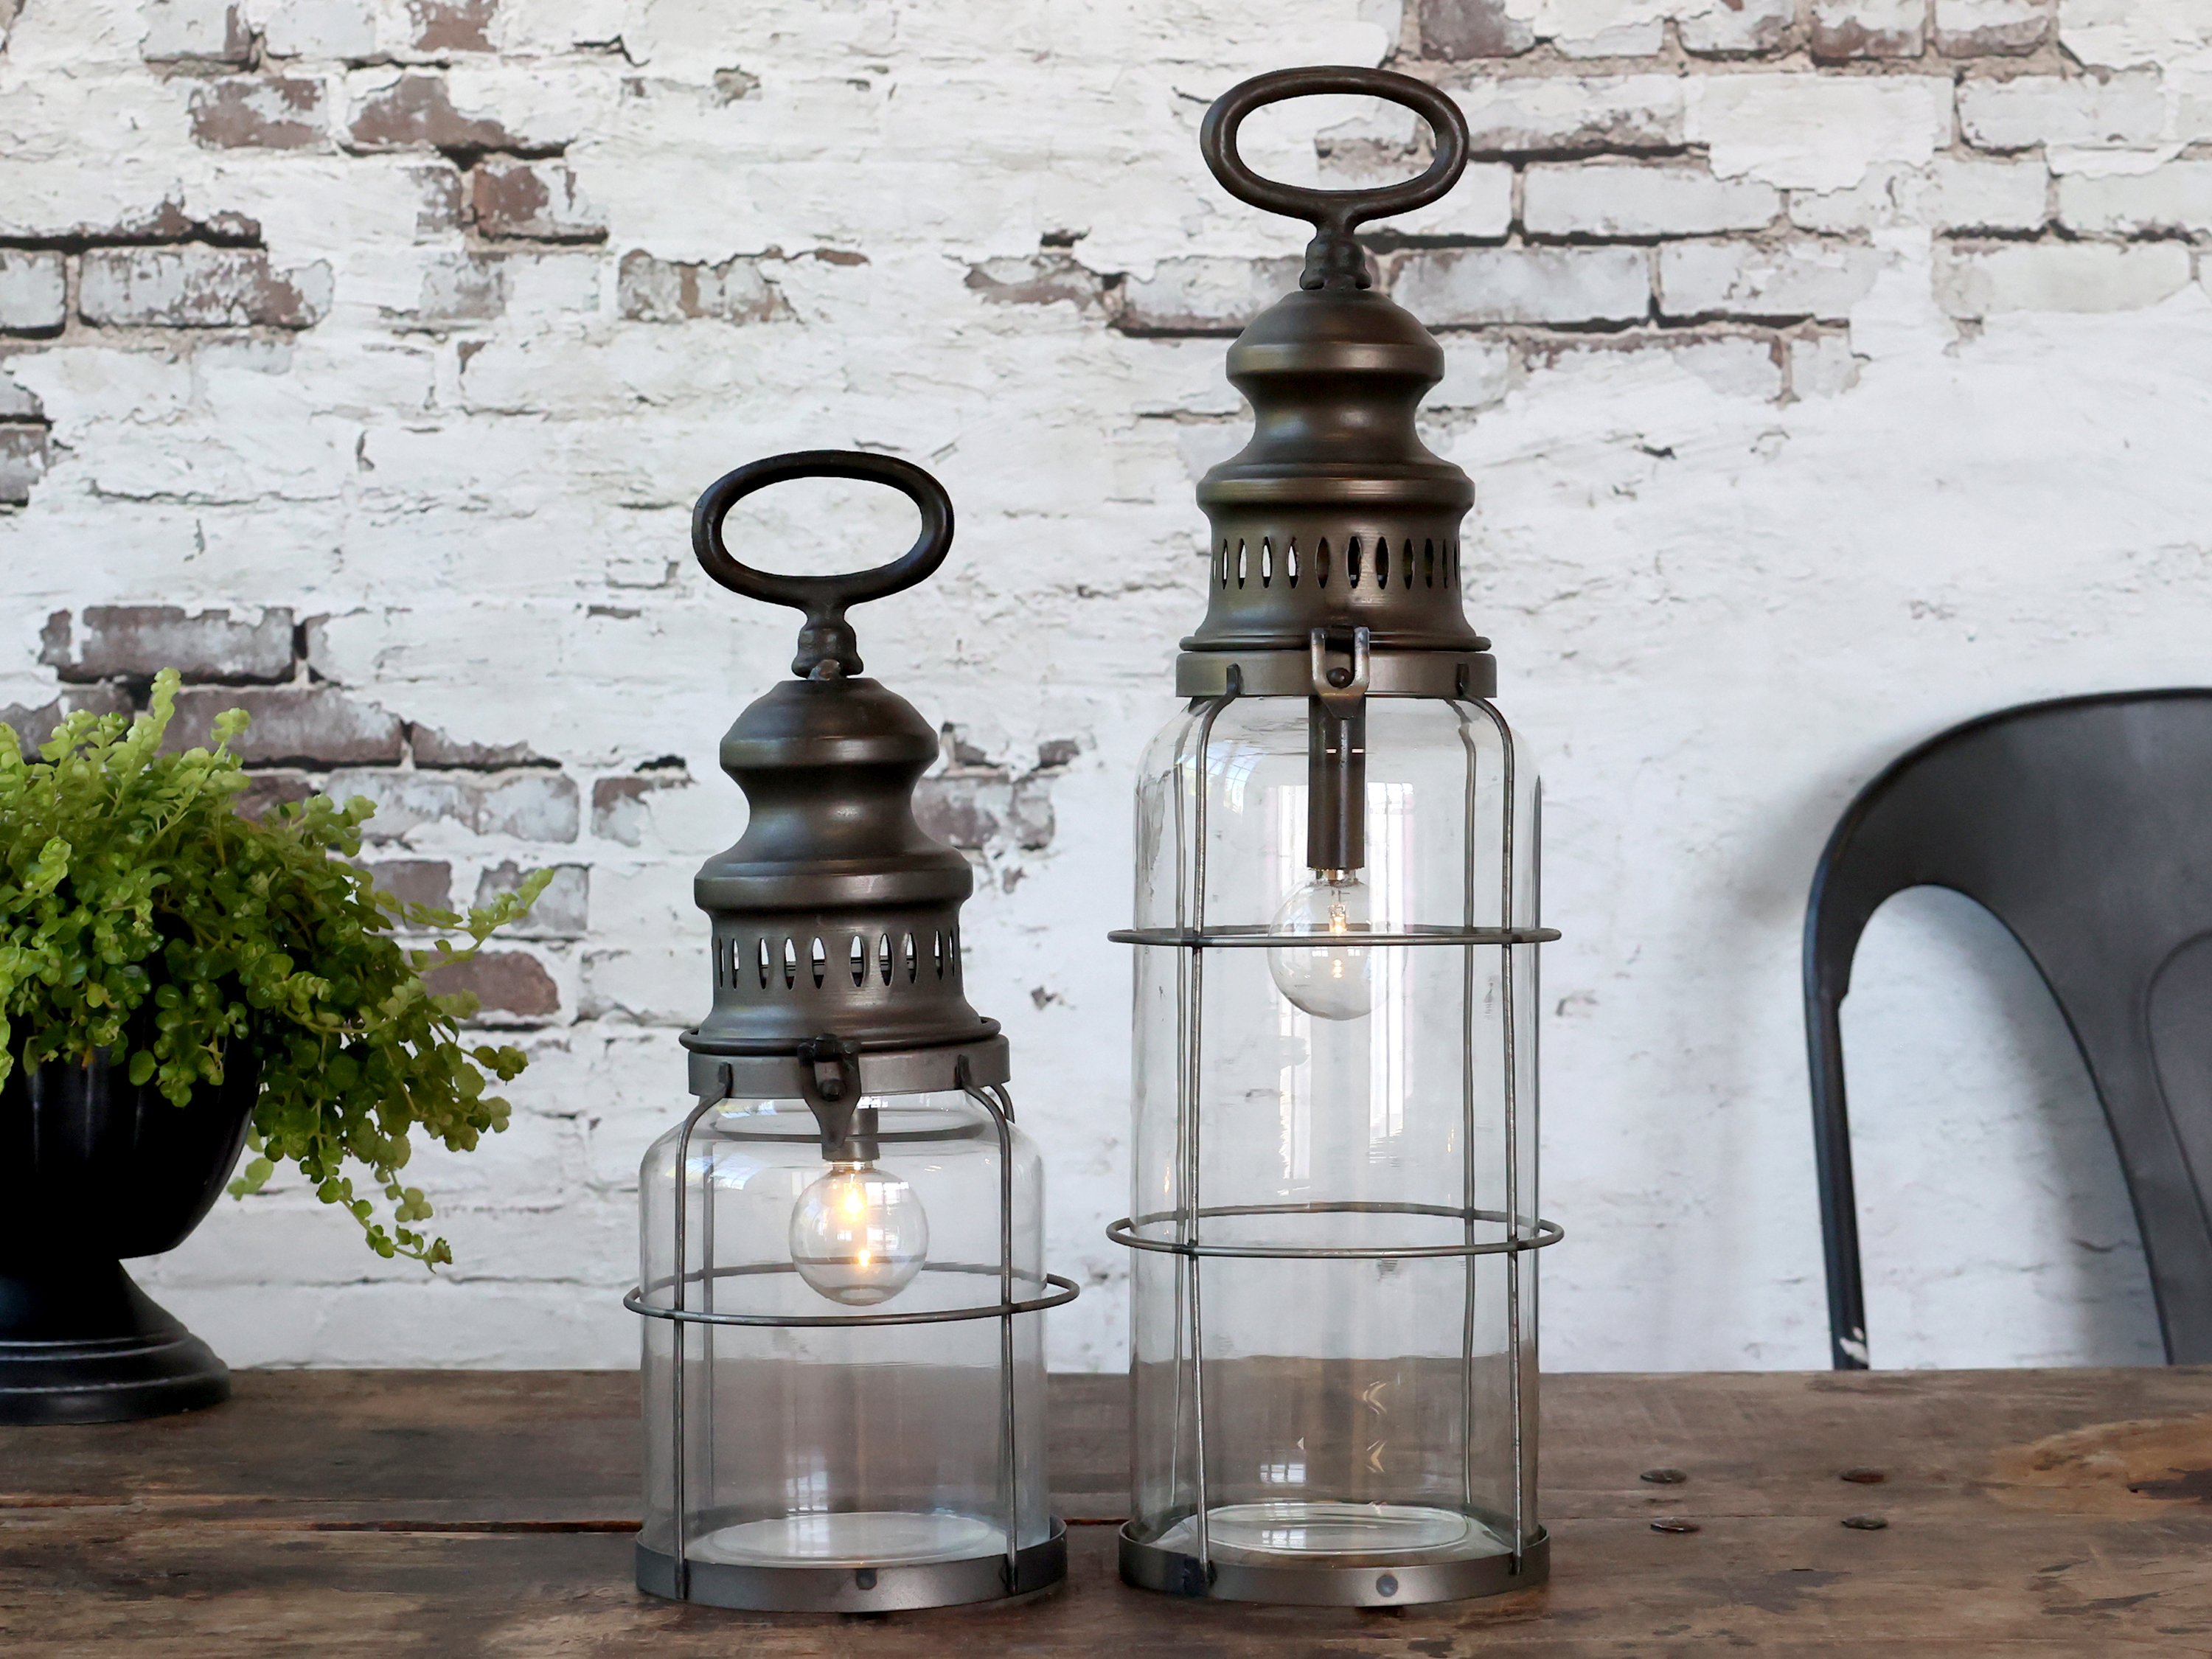 Chic Antique, Fransk stald lanterne med gitter inkl. pre og timer